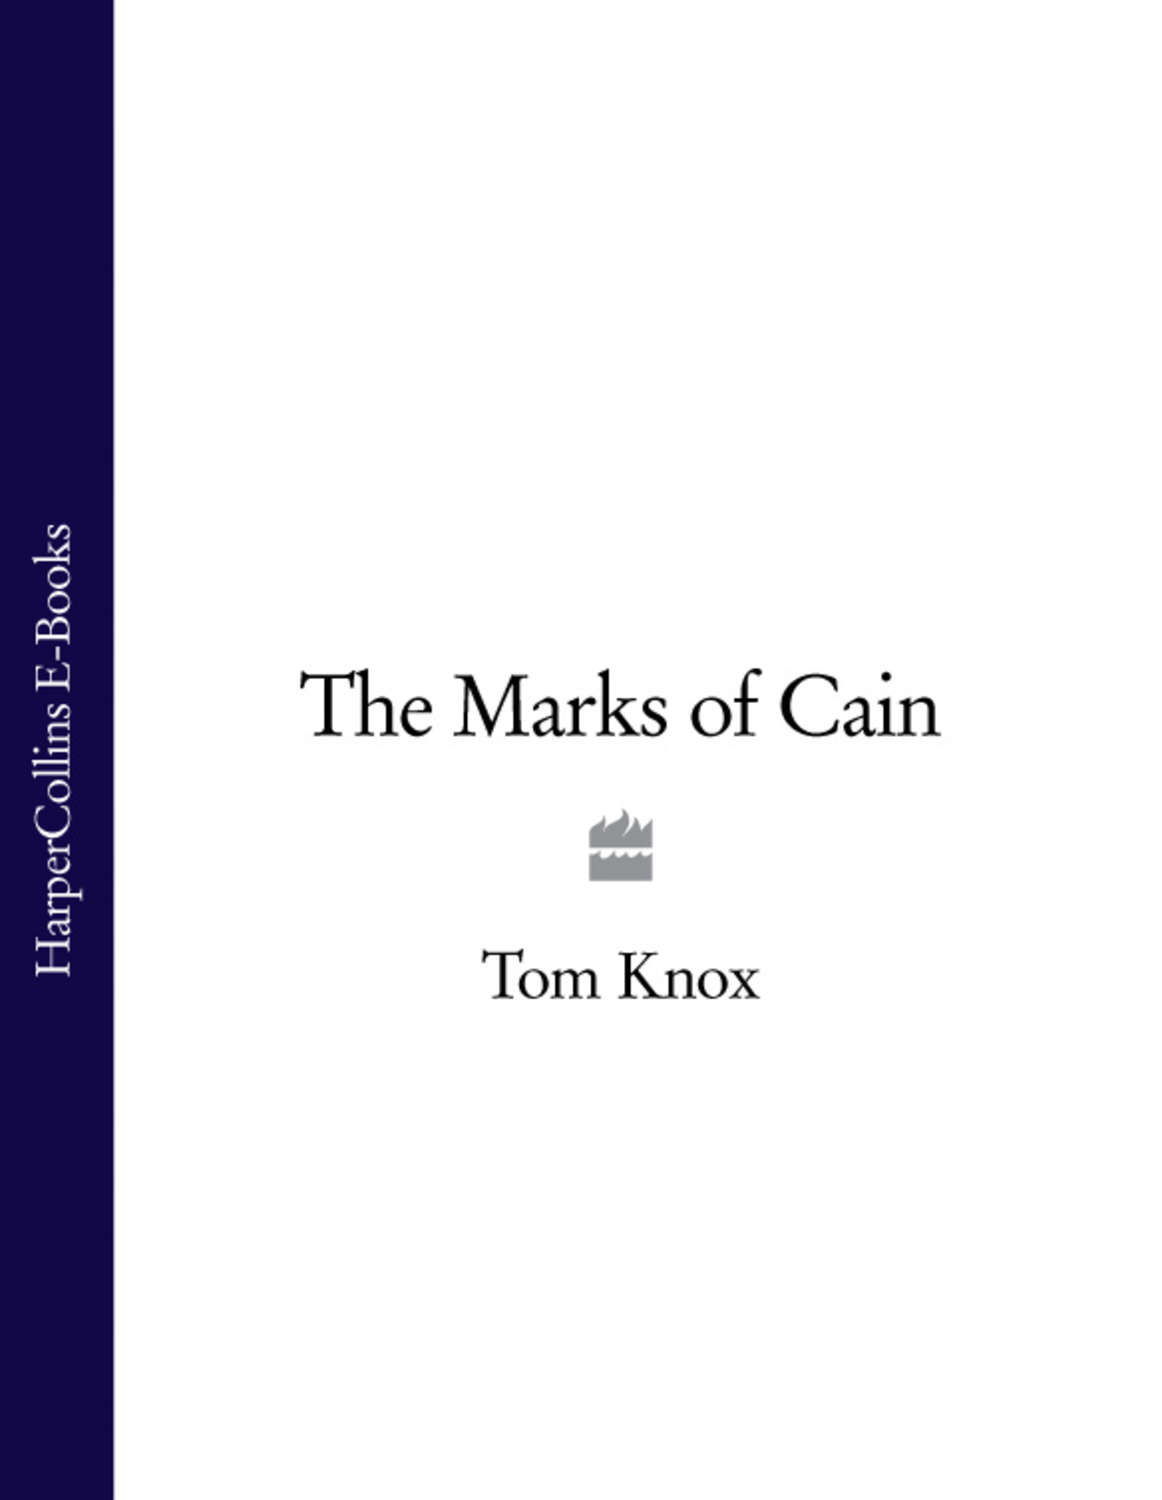 The Marks of Cain, Tom Knox – скачать книгу fb2, epub, pdf на Литрес